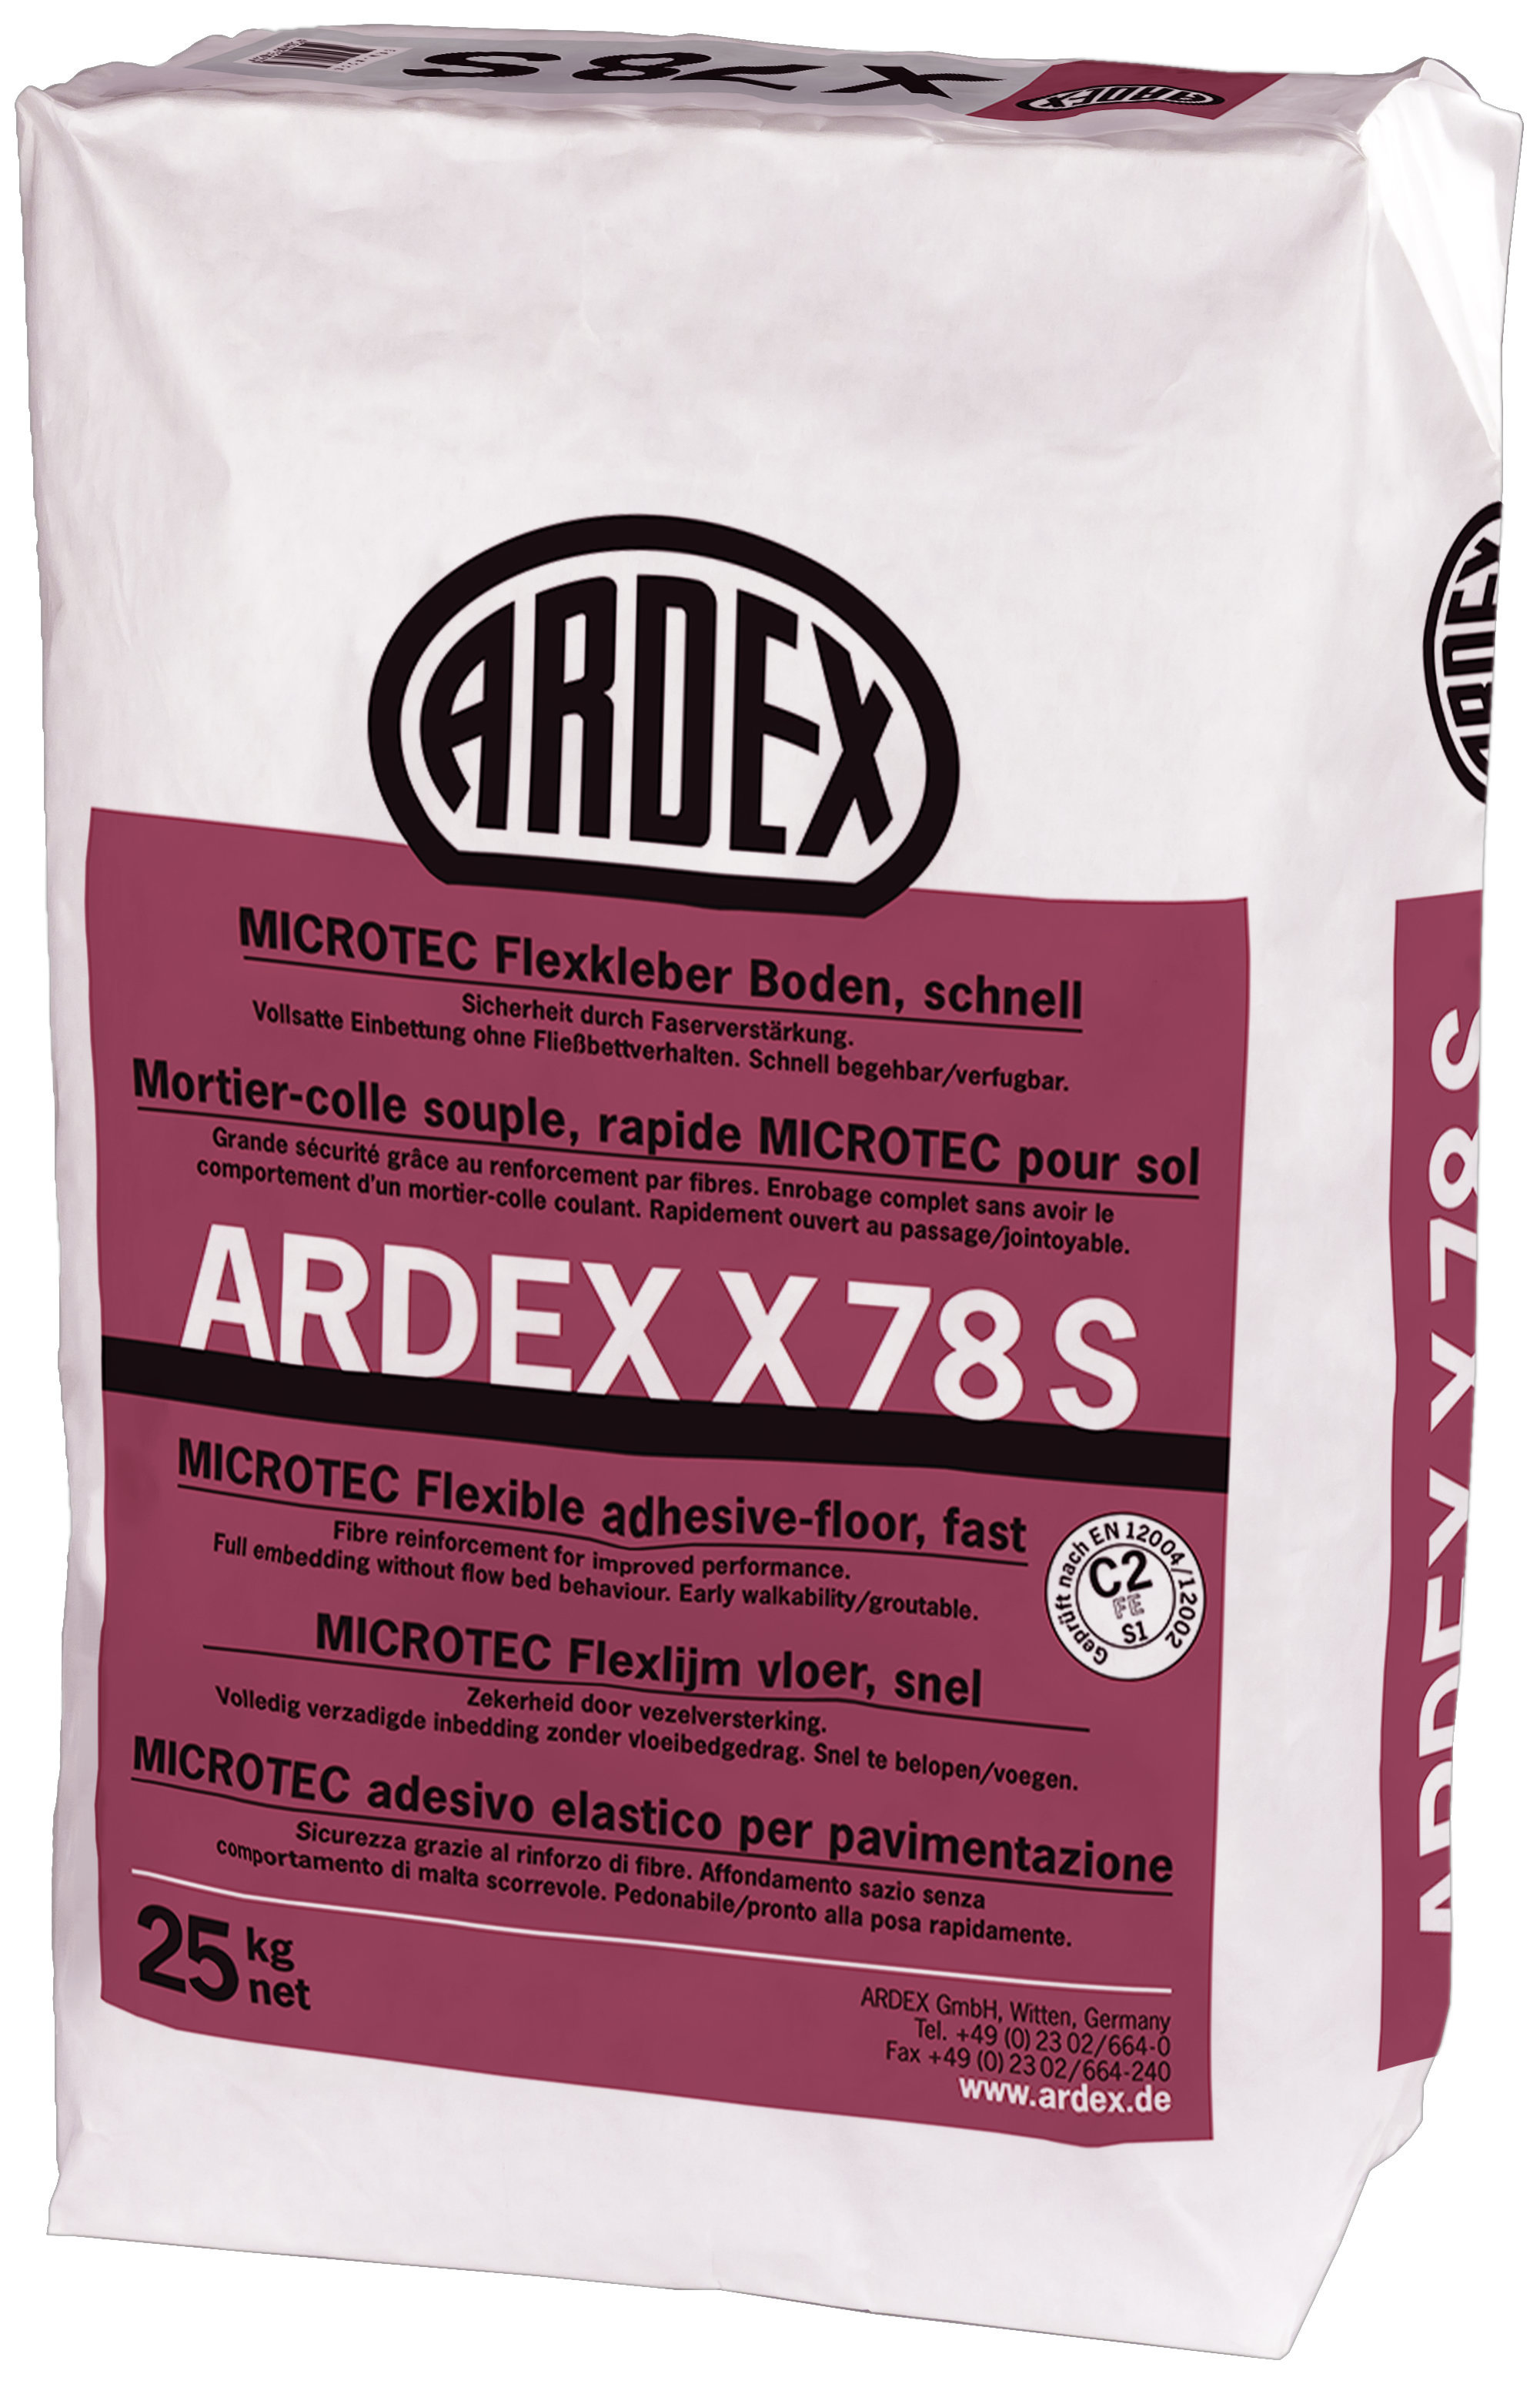 Ardex X 78 S